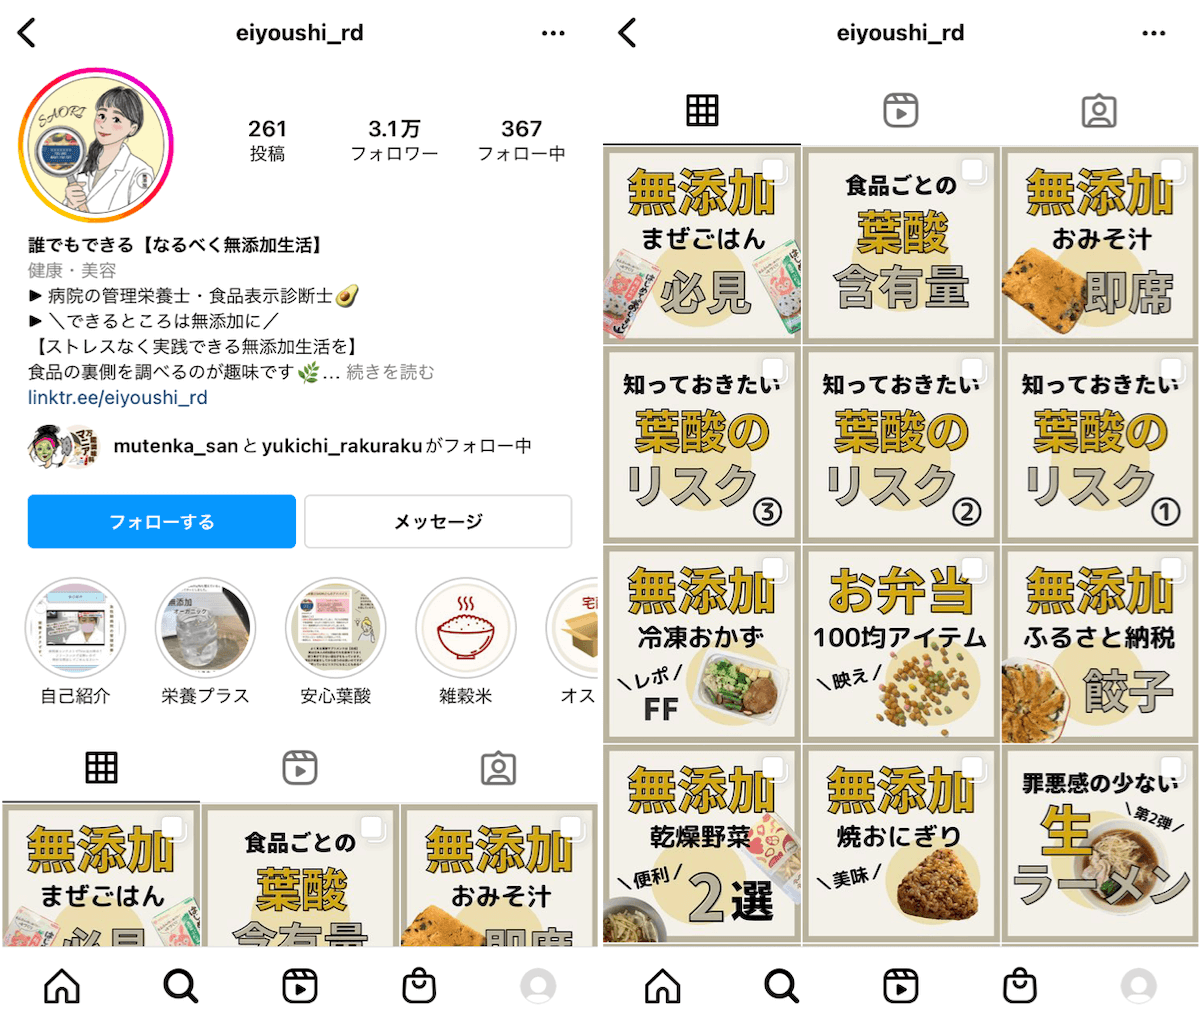 instagram-syokuhin-eiyoushi_rd